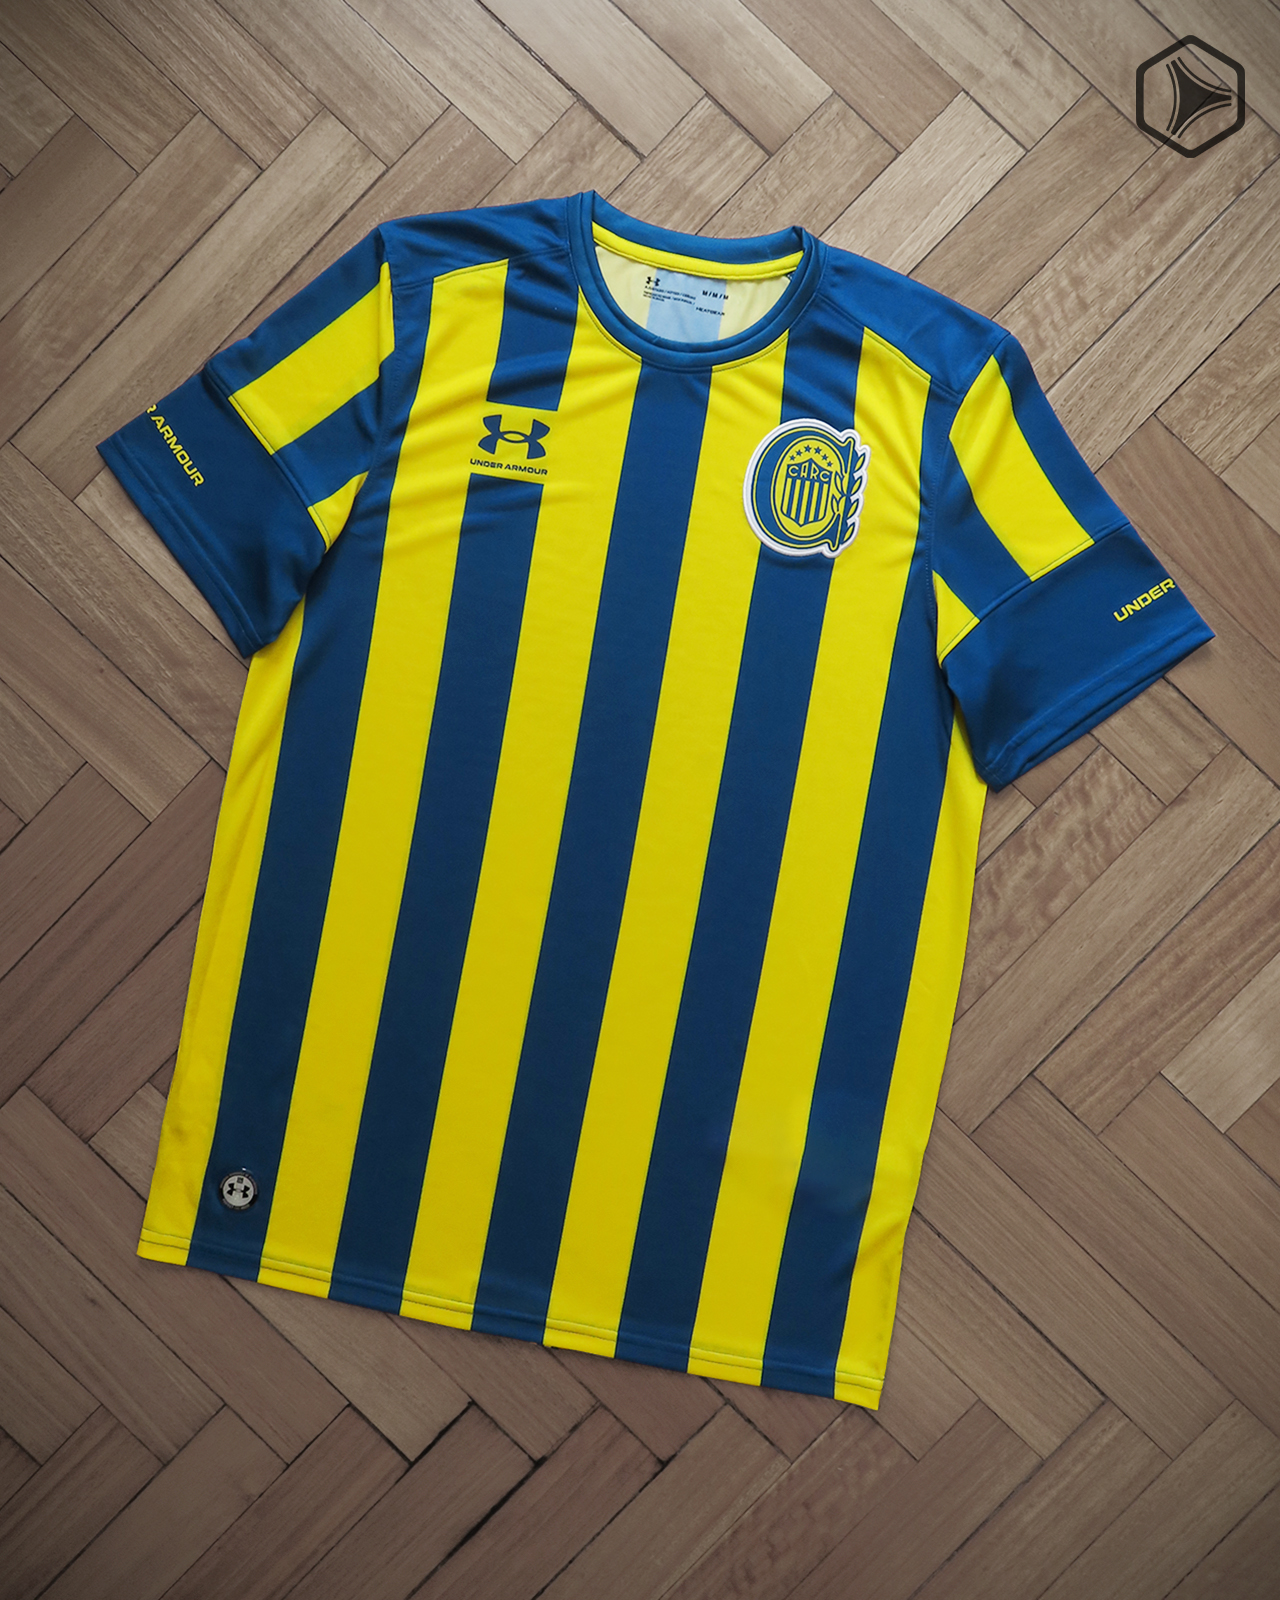 Review - Camisetas Under Armour de Rosario Central 2021 - Baratas camisetas futbol 2020-2021